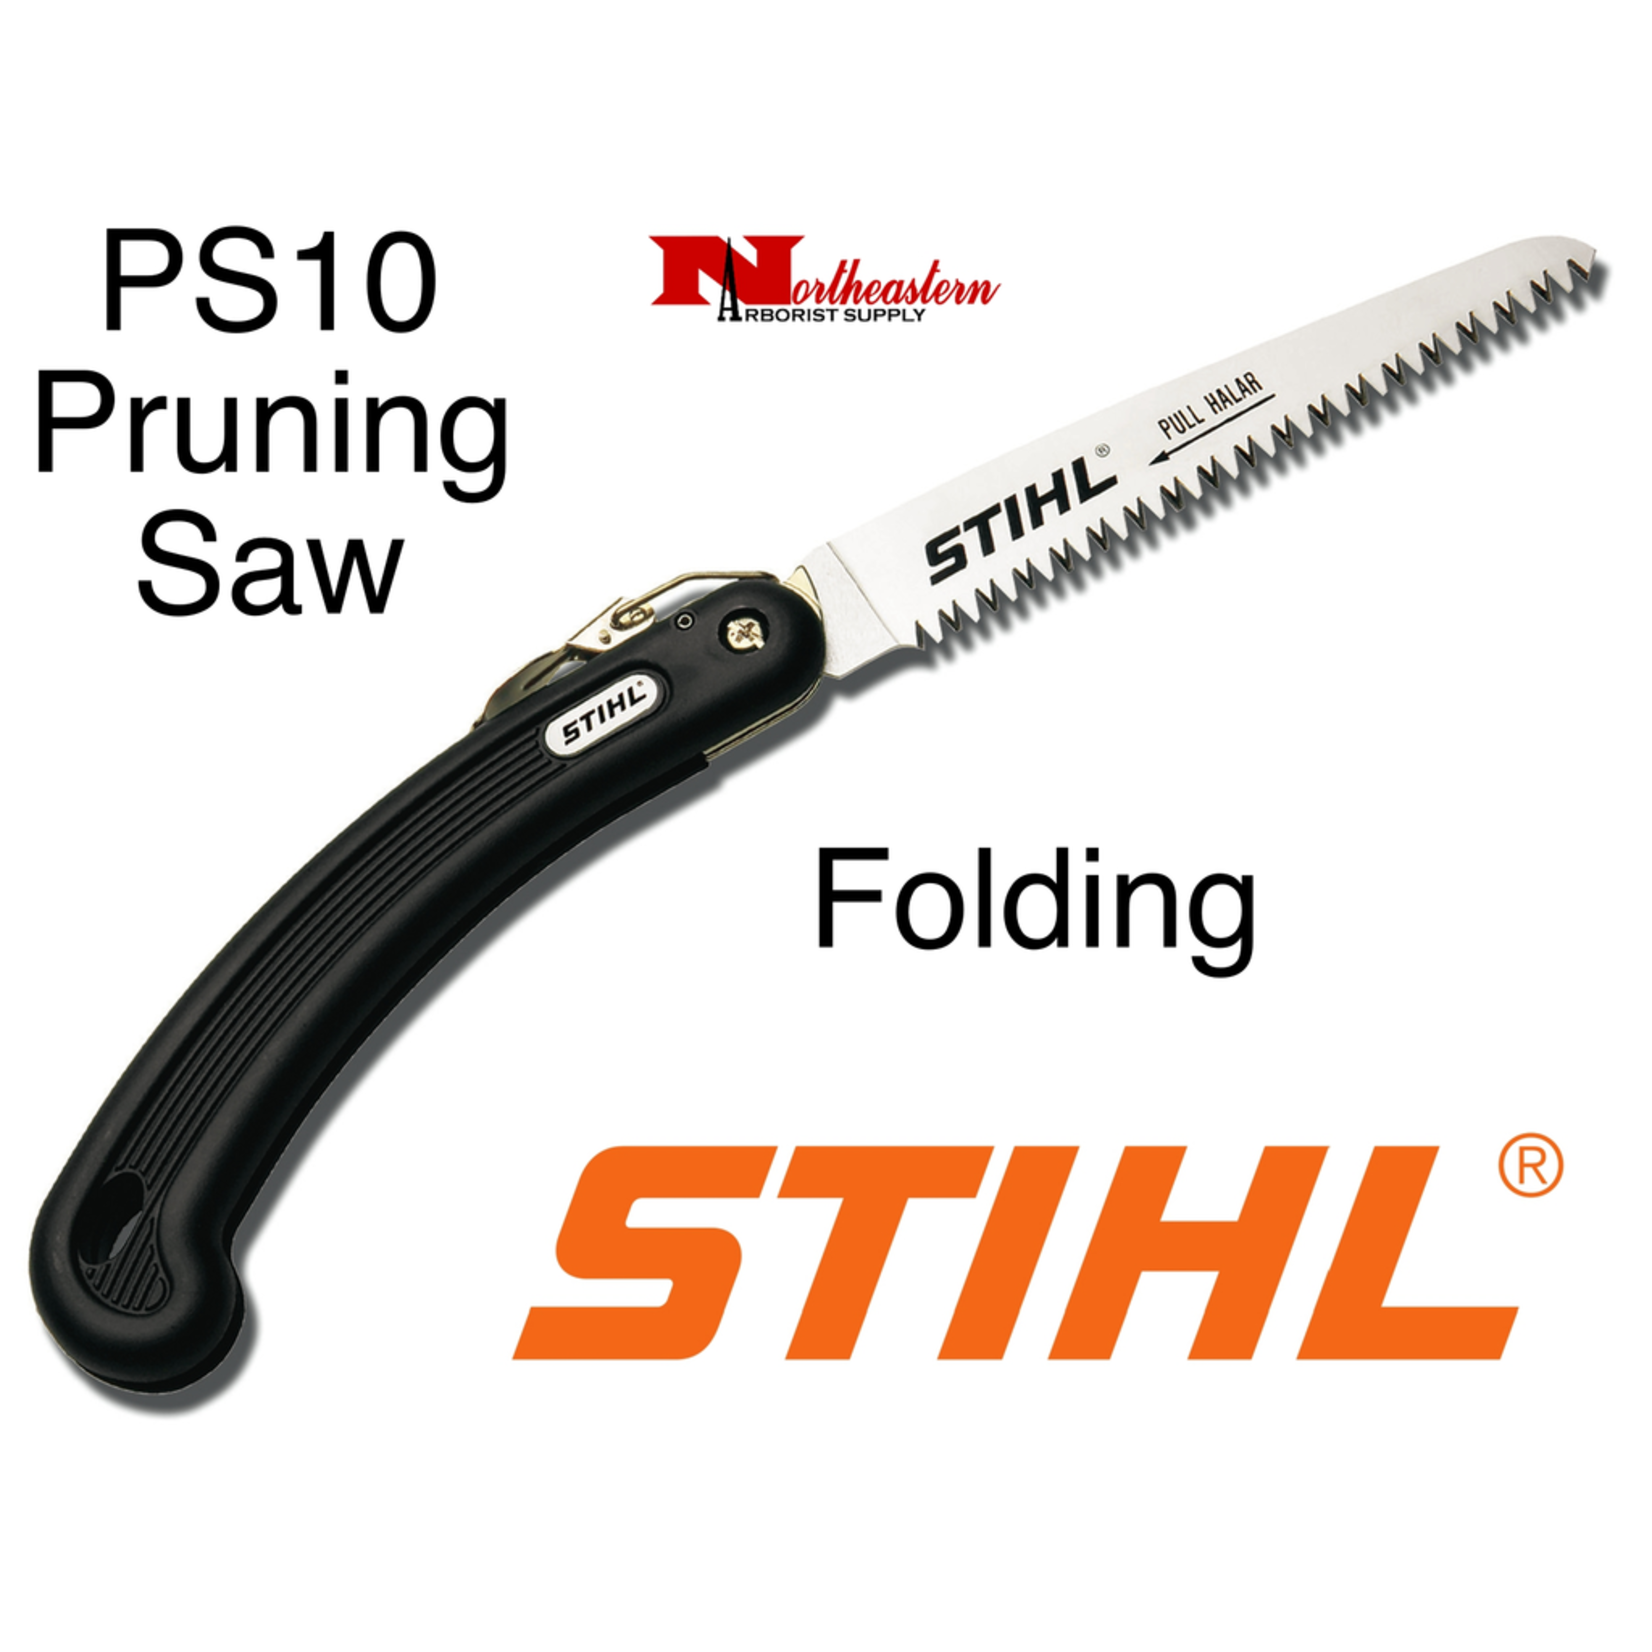 PS 10 Folding Pruning Saw